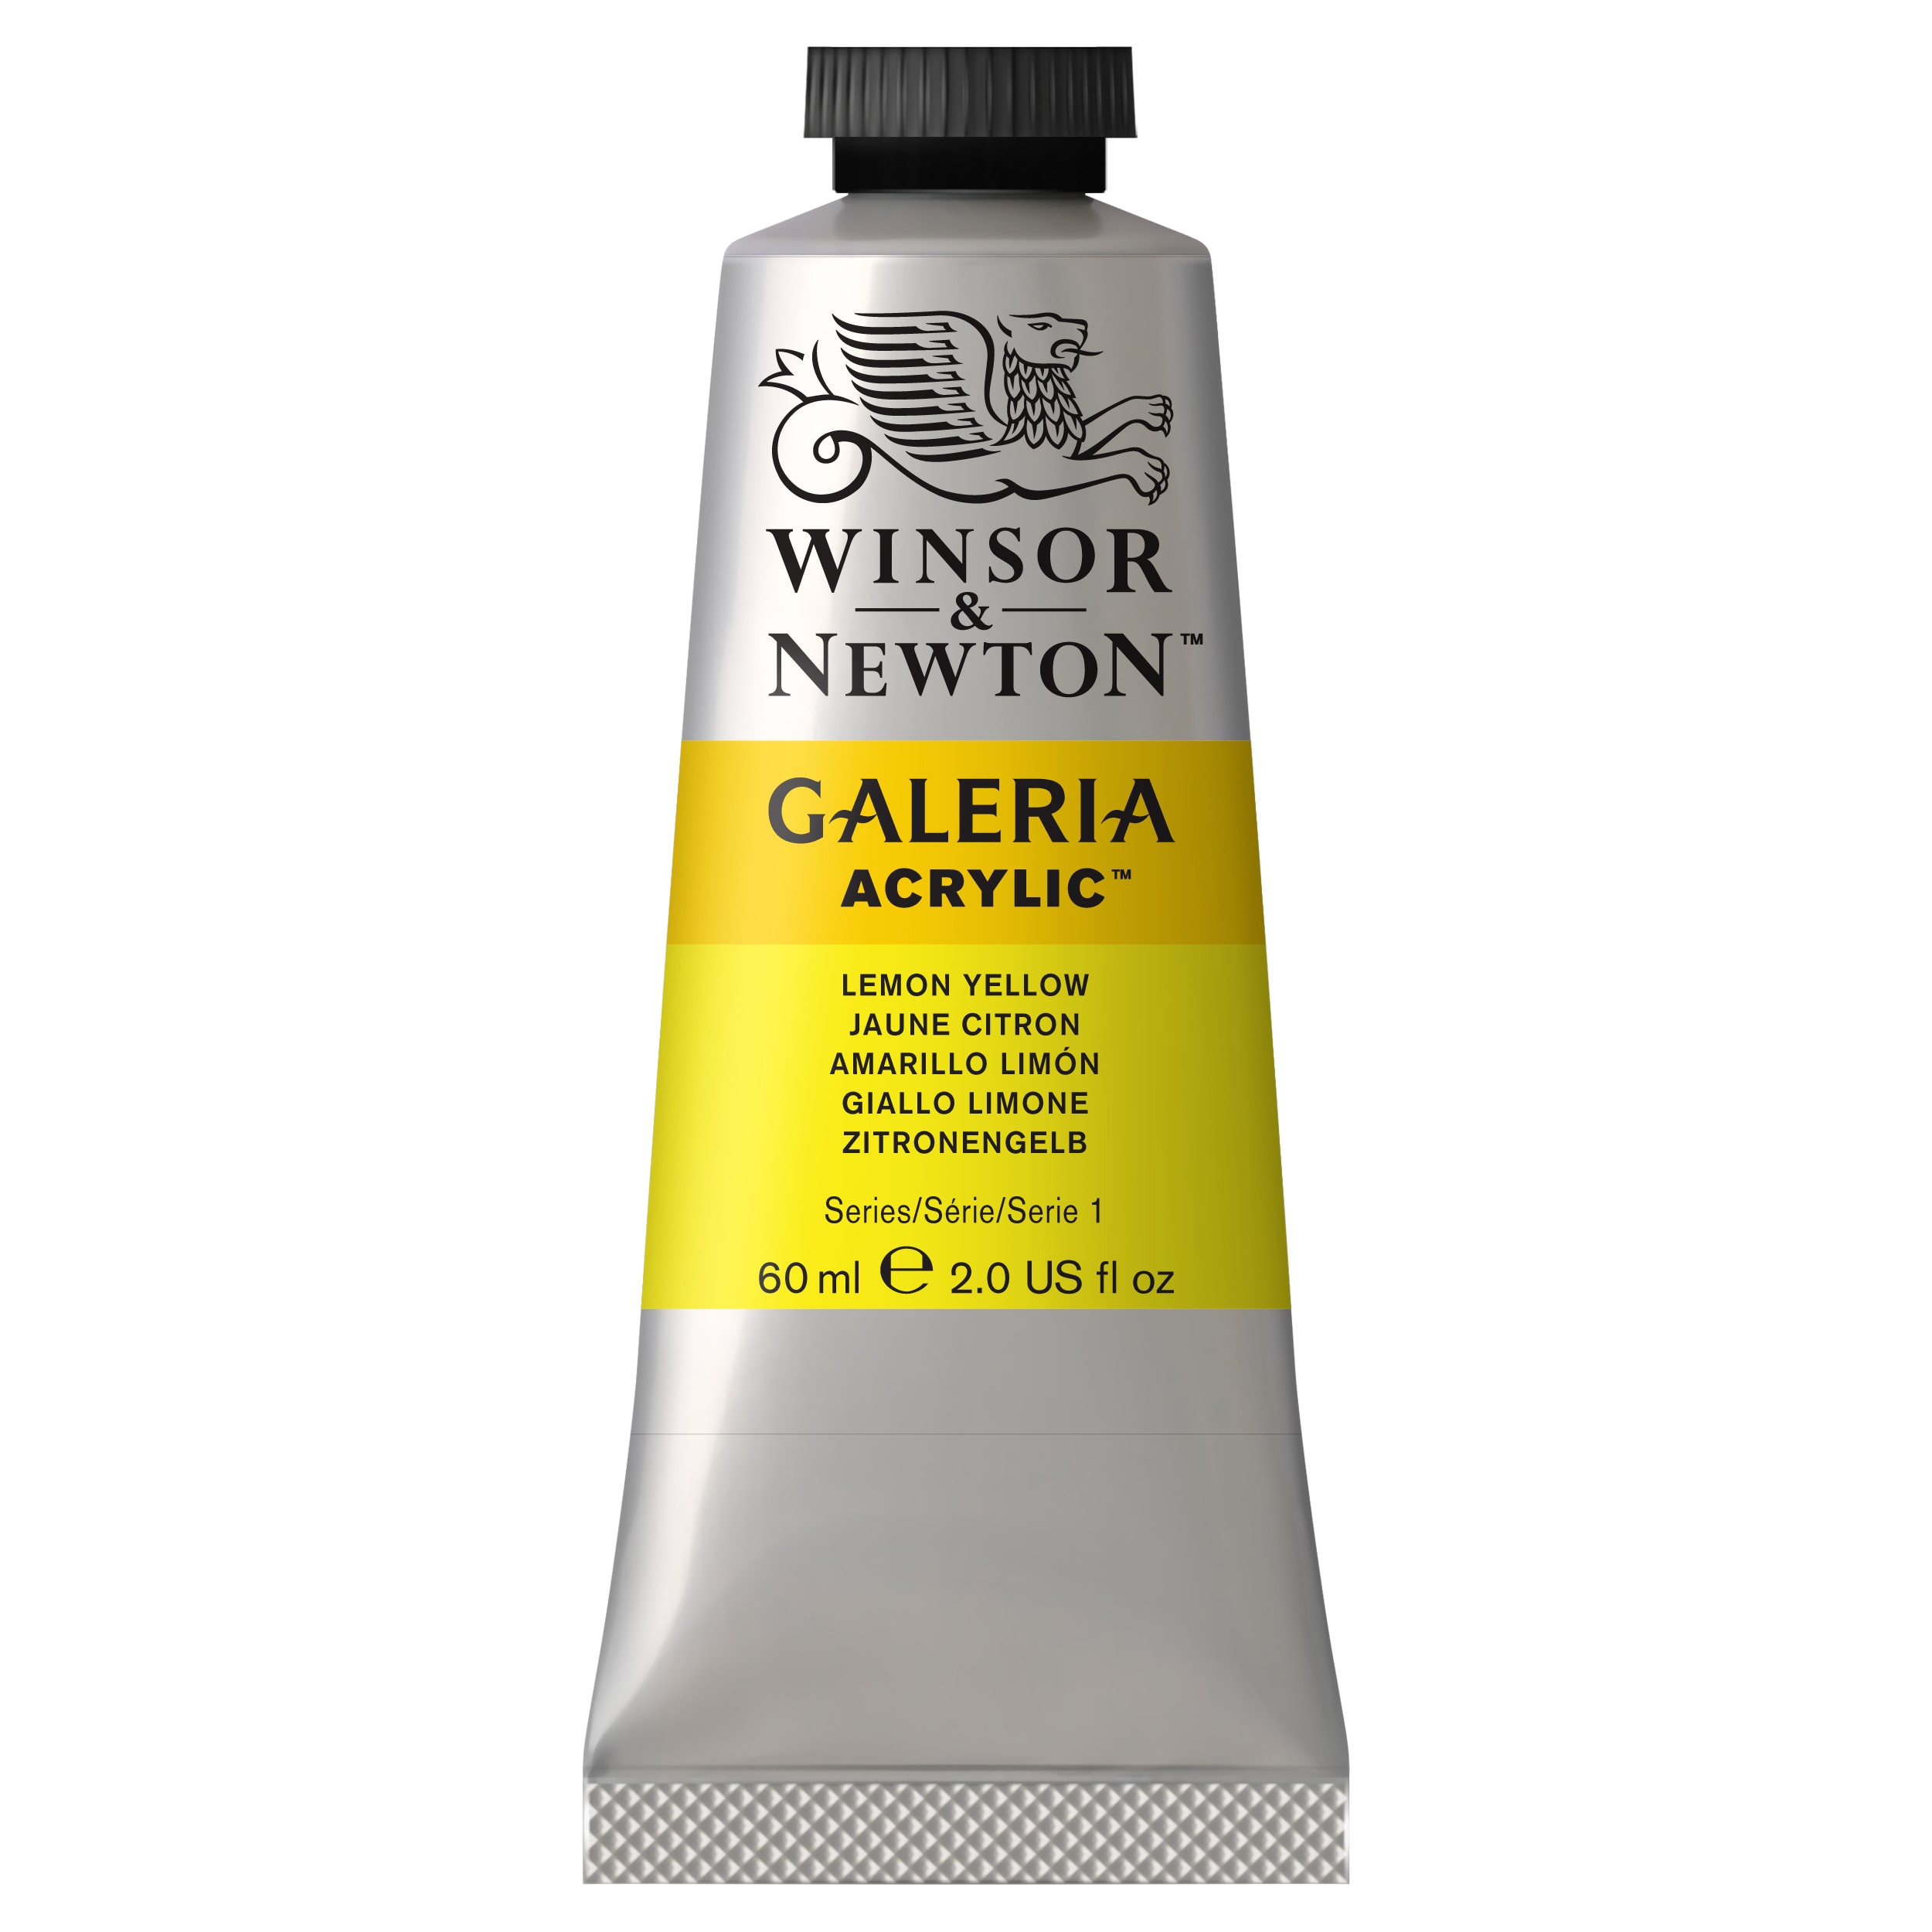 Winsor & Newton Galeria Acrylic Paint, 60ml, Lemon Yellow